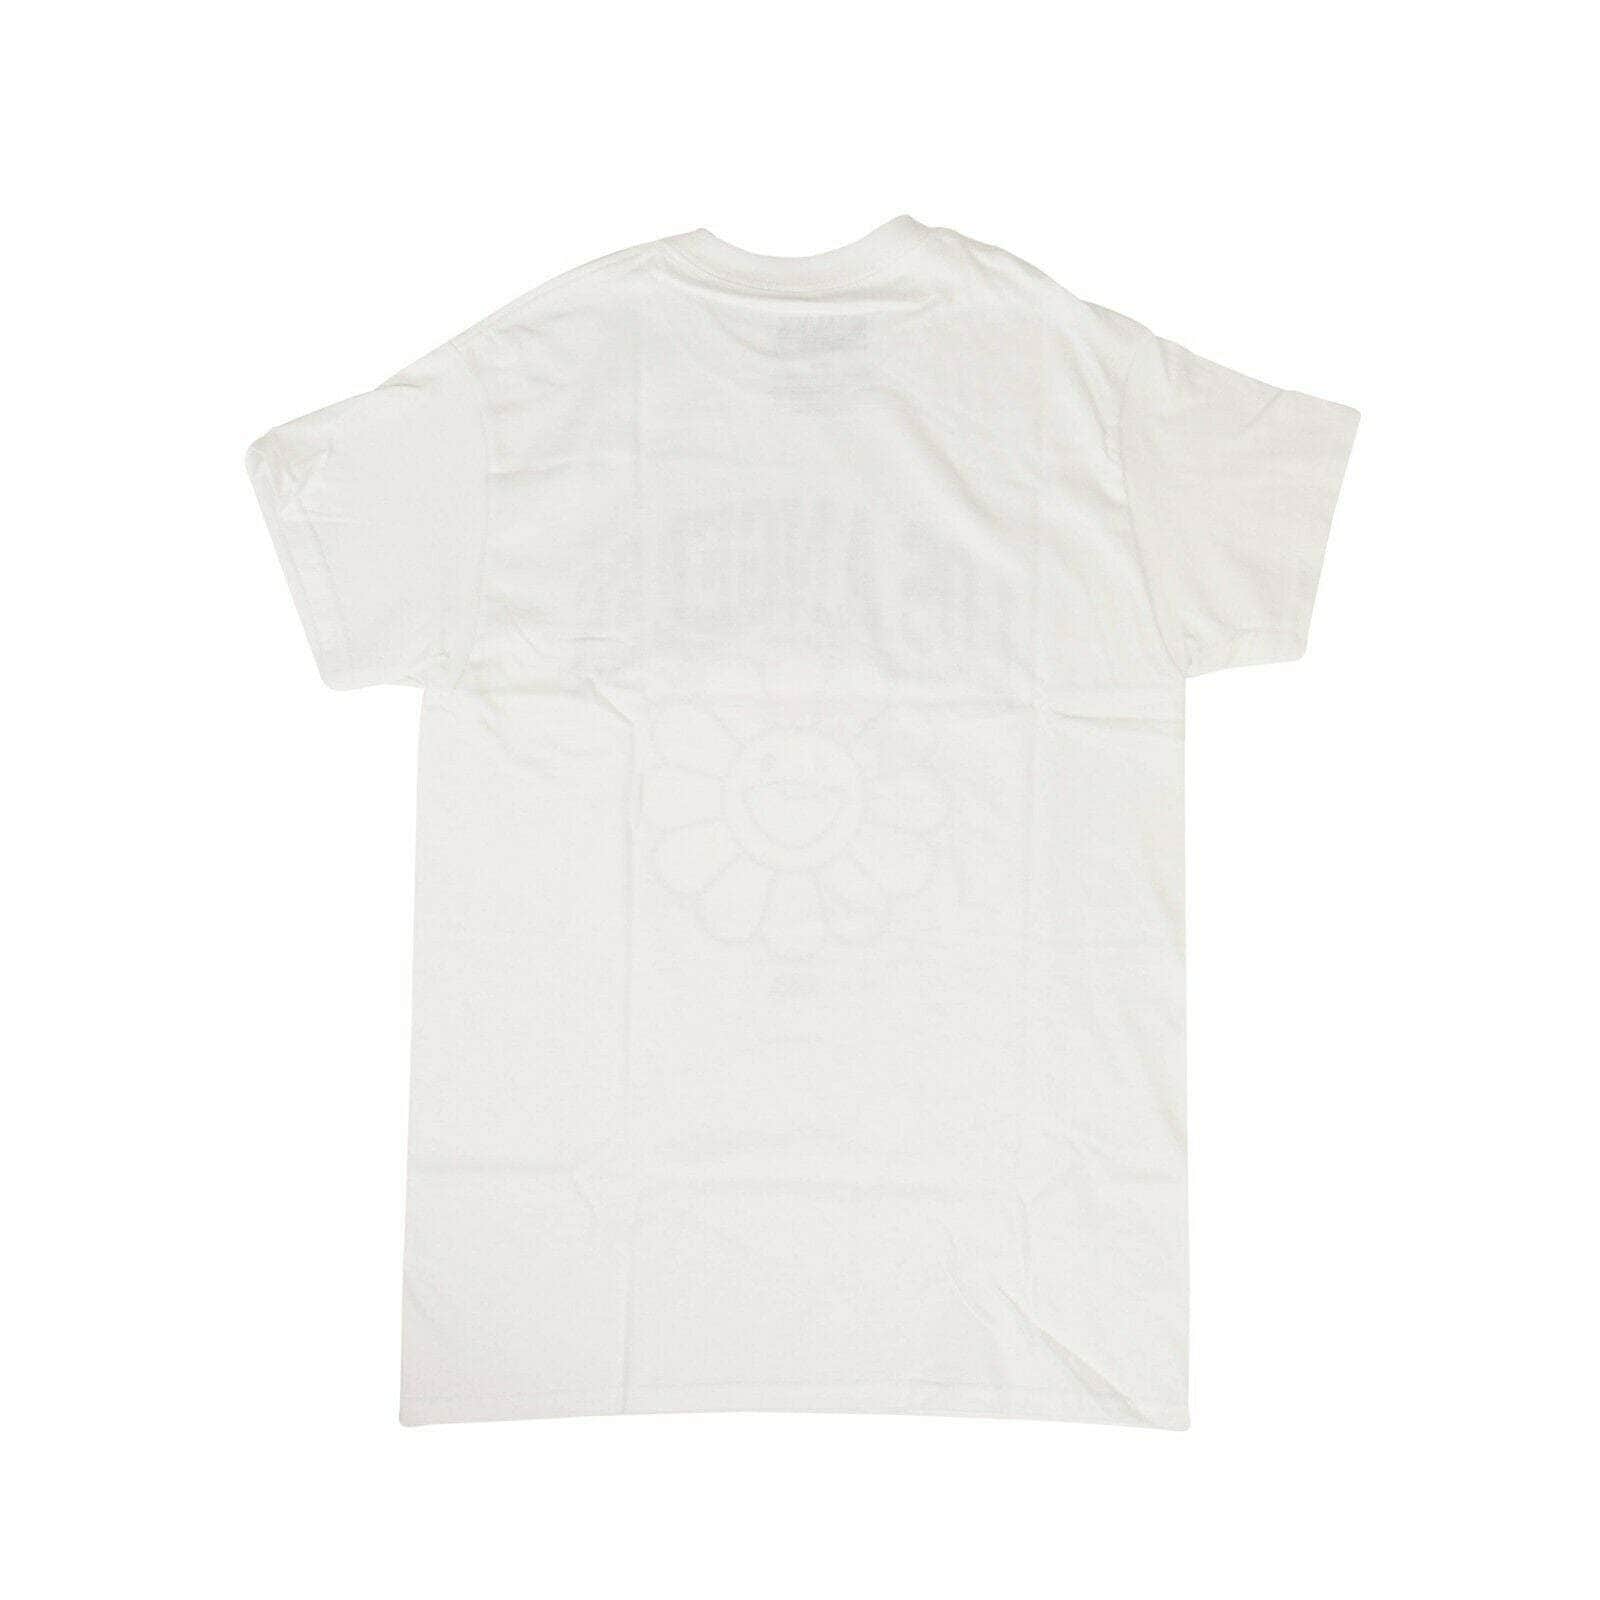 TAKASHI MURAKAMI x COMPLEXCON 'Los Angeles Flower' T-Shirt - White